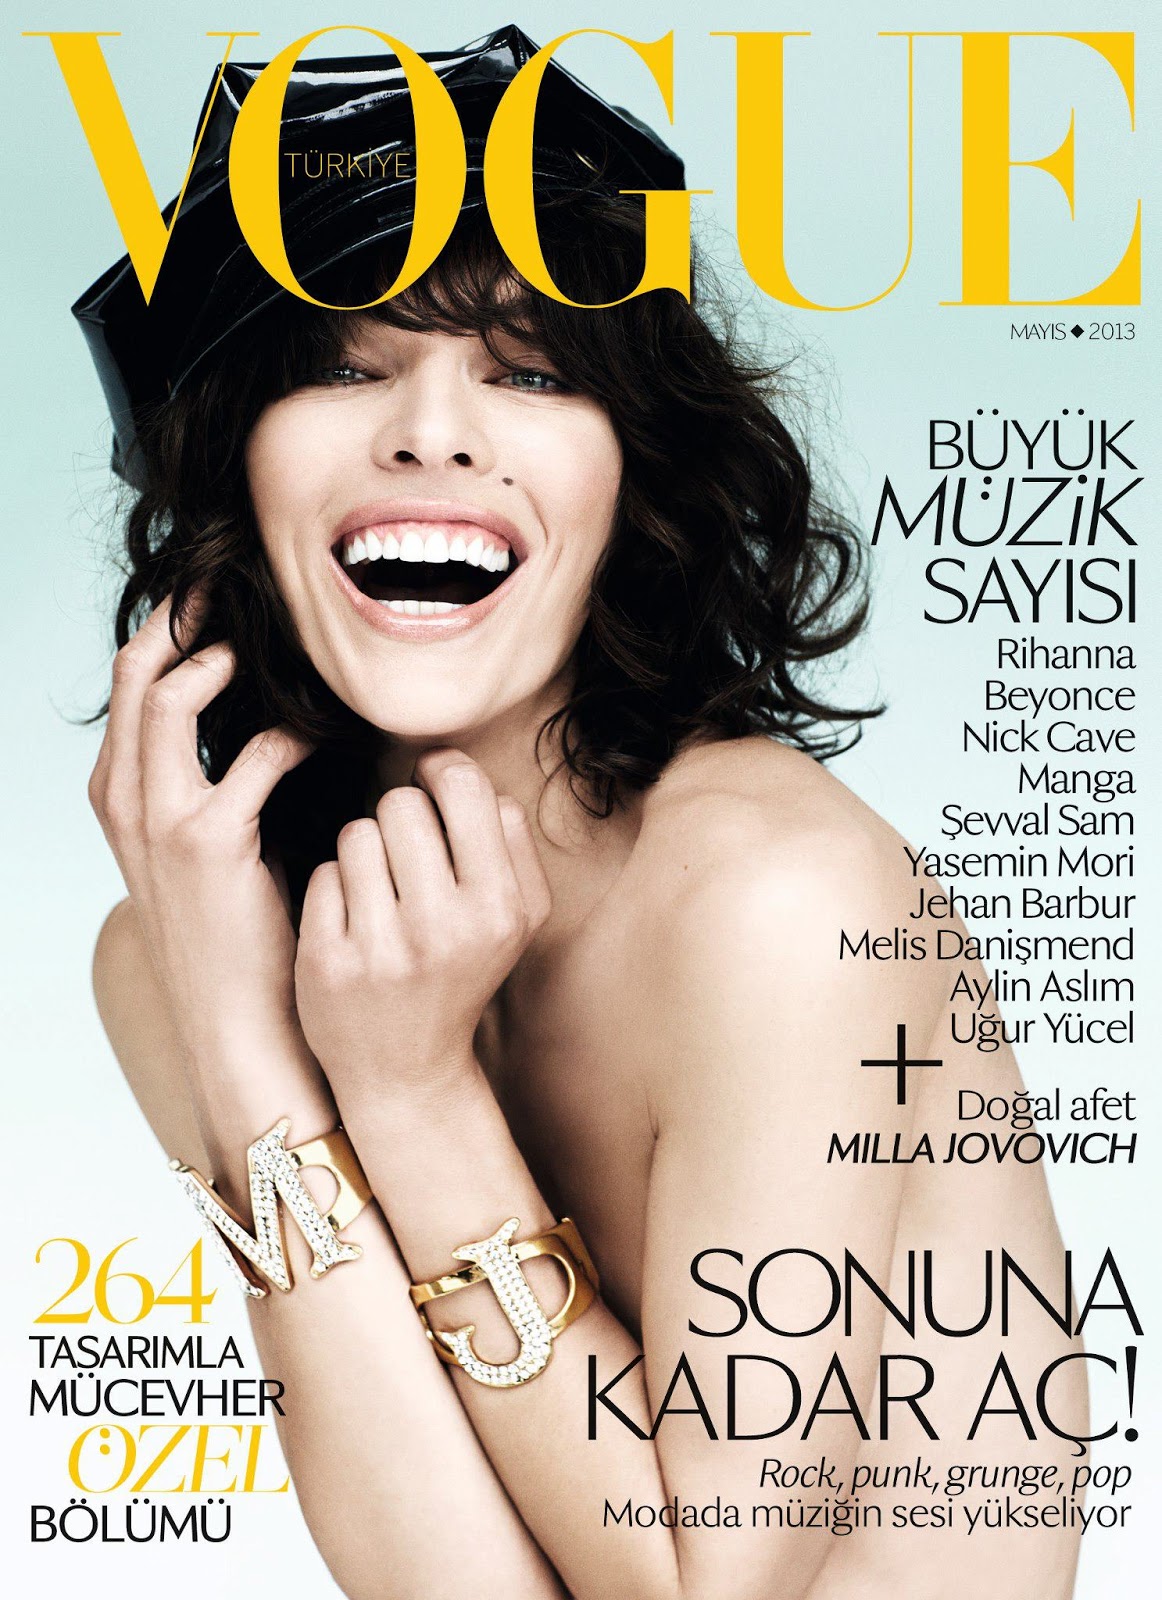 http://2.bp.blogspot.com/--_whsbEKgN4/UYJlsy9d_eI/AAAAAAABQ64/ZLSCjM8ZZHg/s1600/Vogue-Turkey-May-2013-Milla-Jovovich-Magazine-Cover.jpg